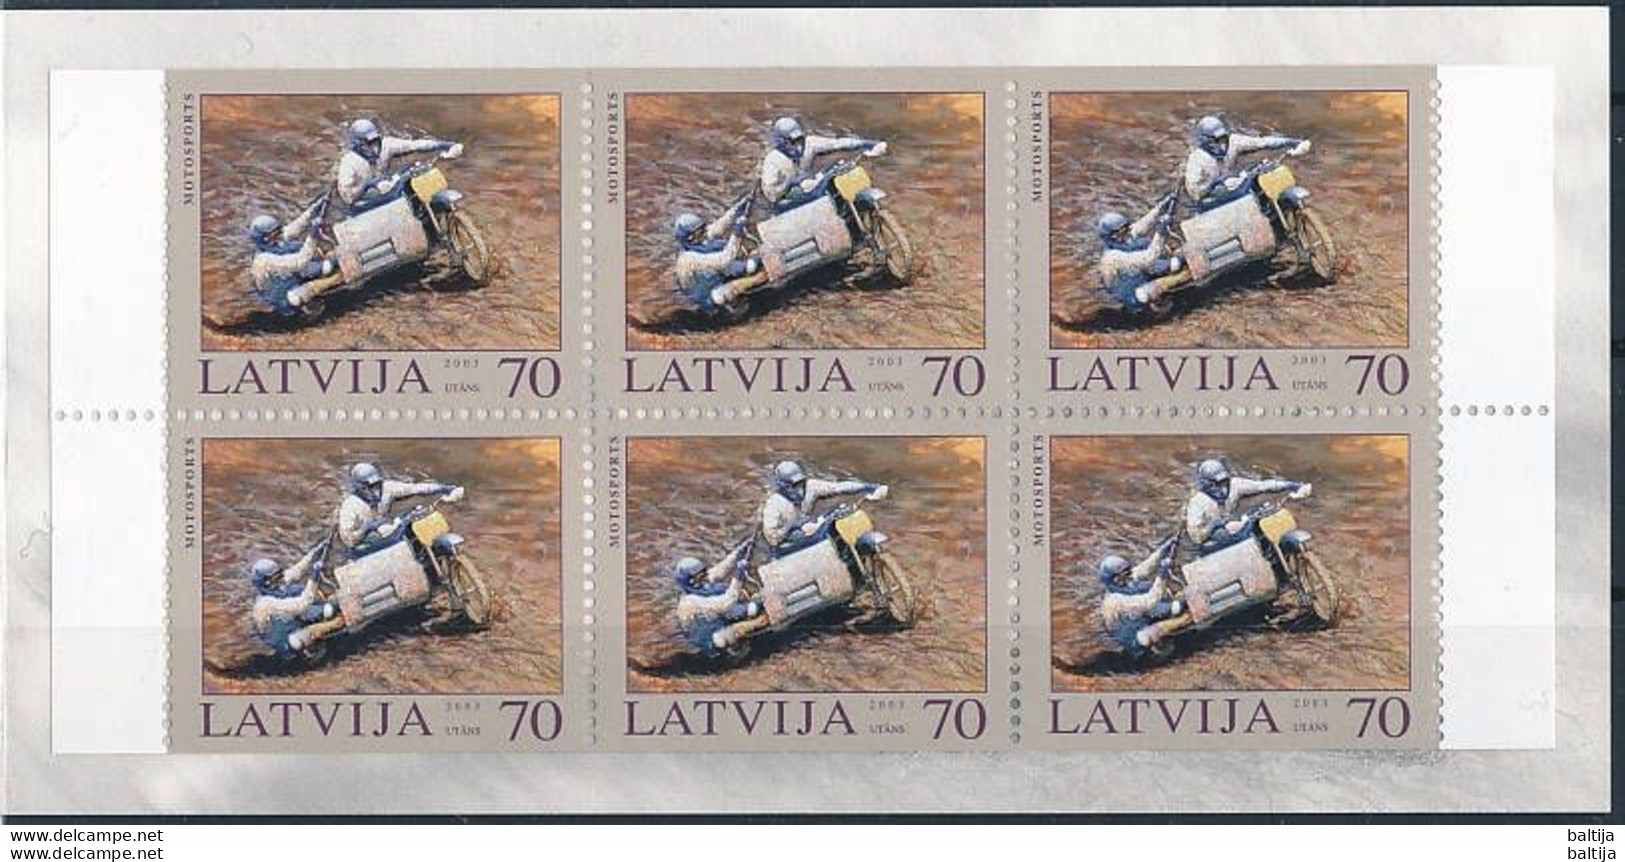 Latvia, Mi 599 ** MNH, Markenheft, Booklet / Sidecarcross Racing, Sidecar Motocross / Philatelic Exhibition Helsinki '03 - Motorräder